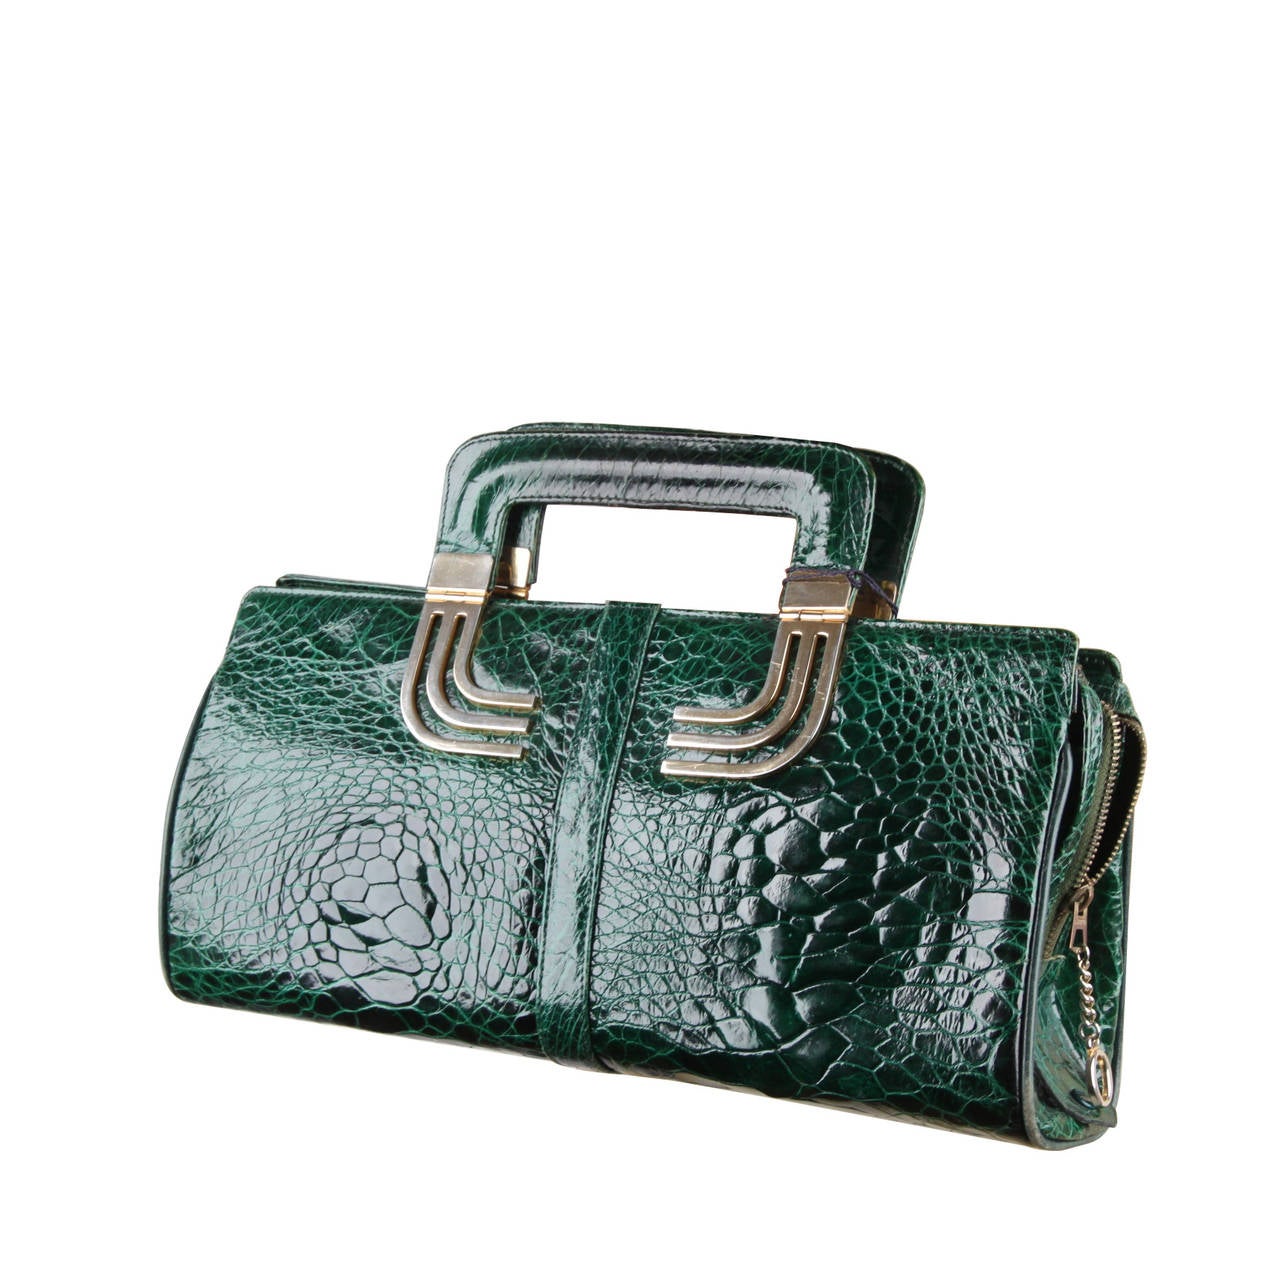 VINTAGE Italian Green TURTLE SKIN Leather TOTE HANDBAG w/ Matching Wallet